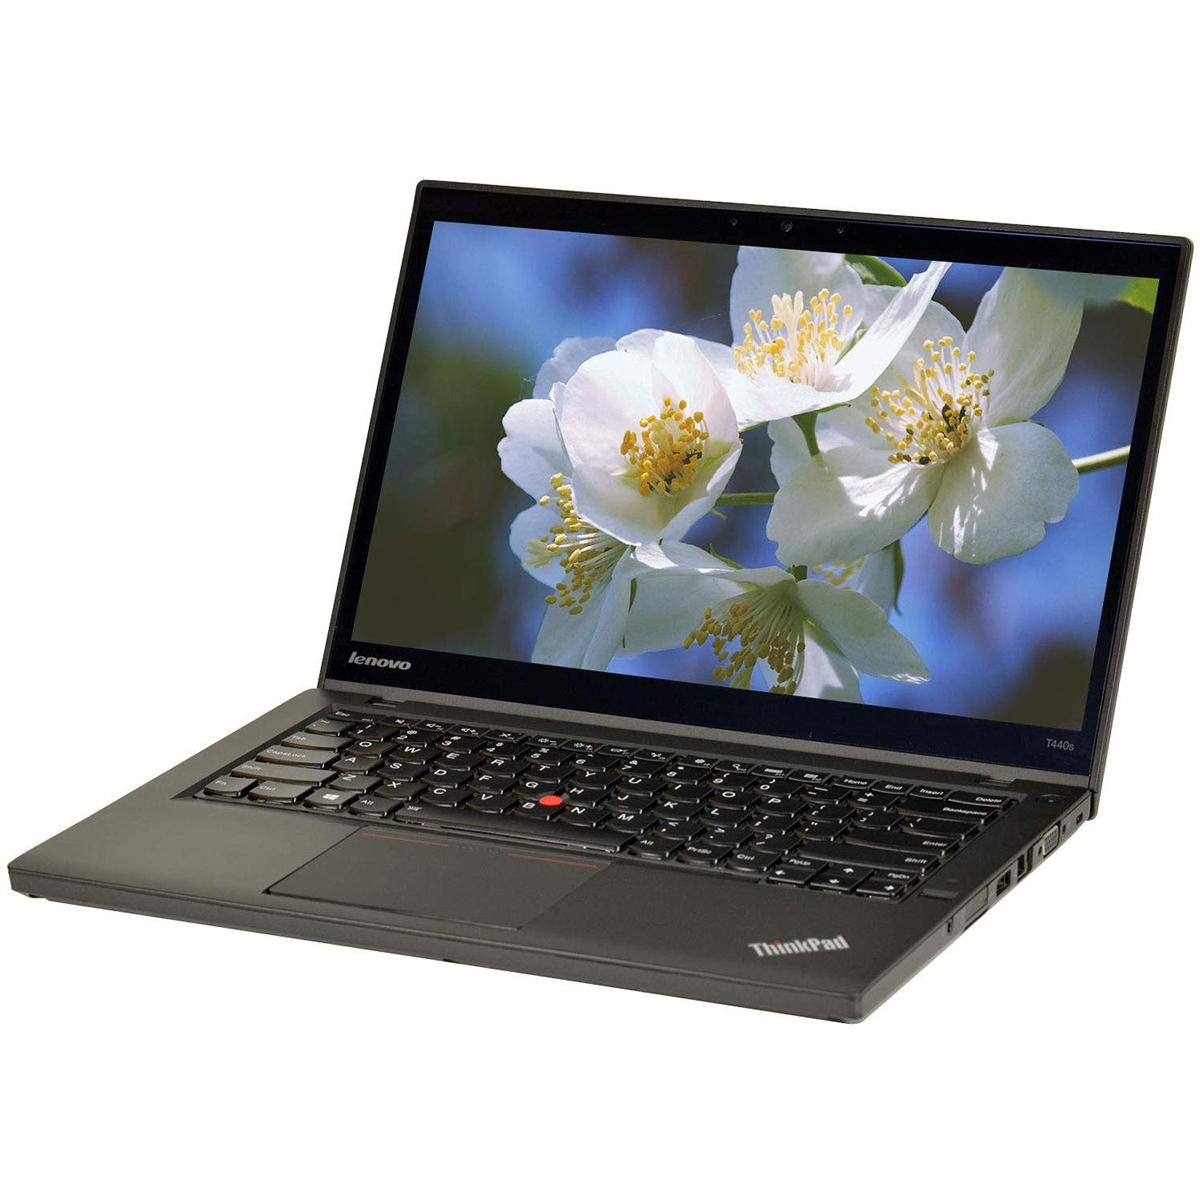 Lenovo ThinkPad T440s TouchScreen